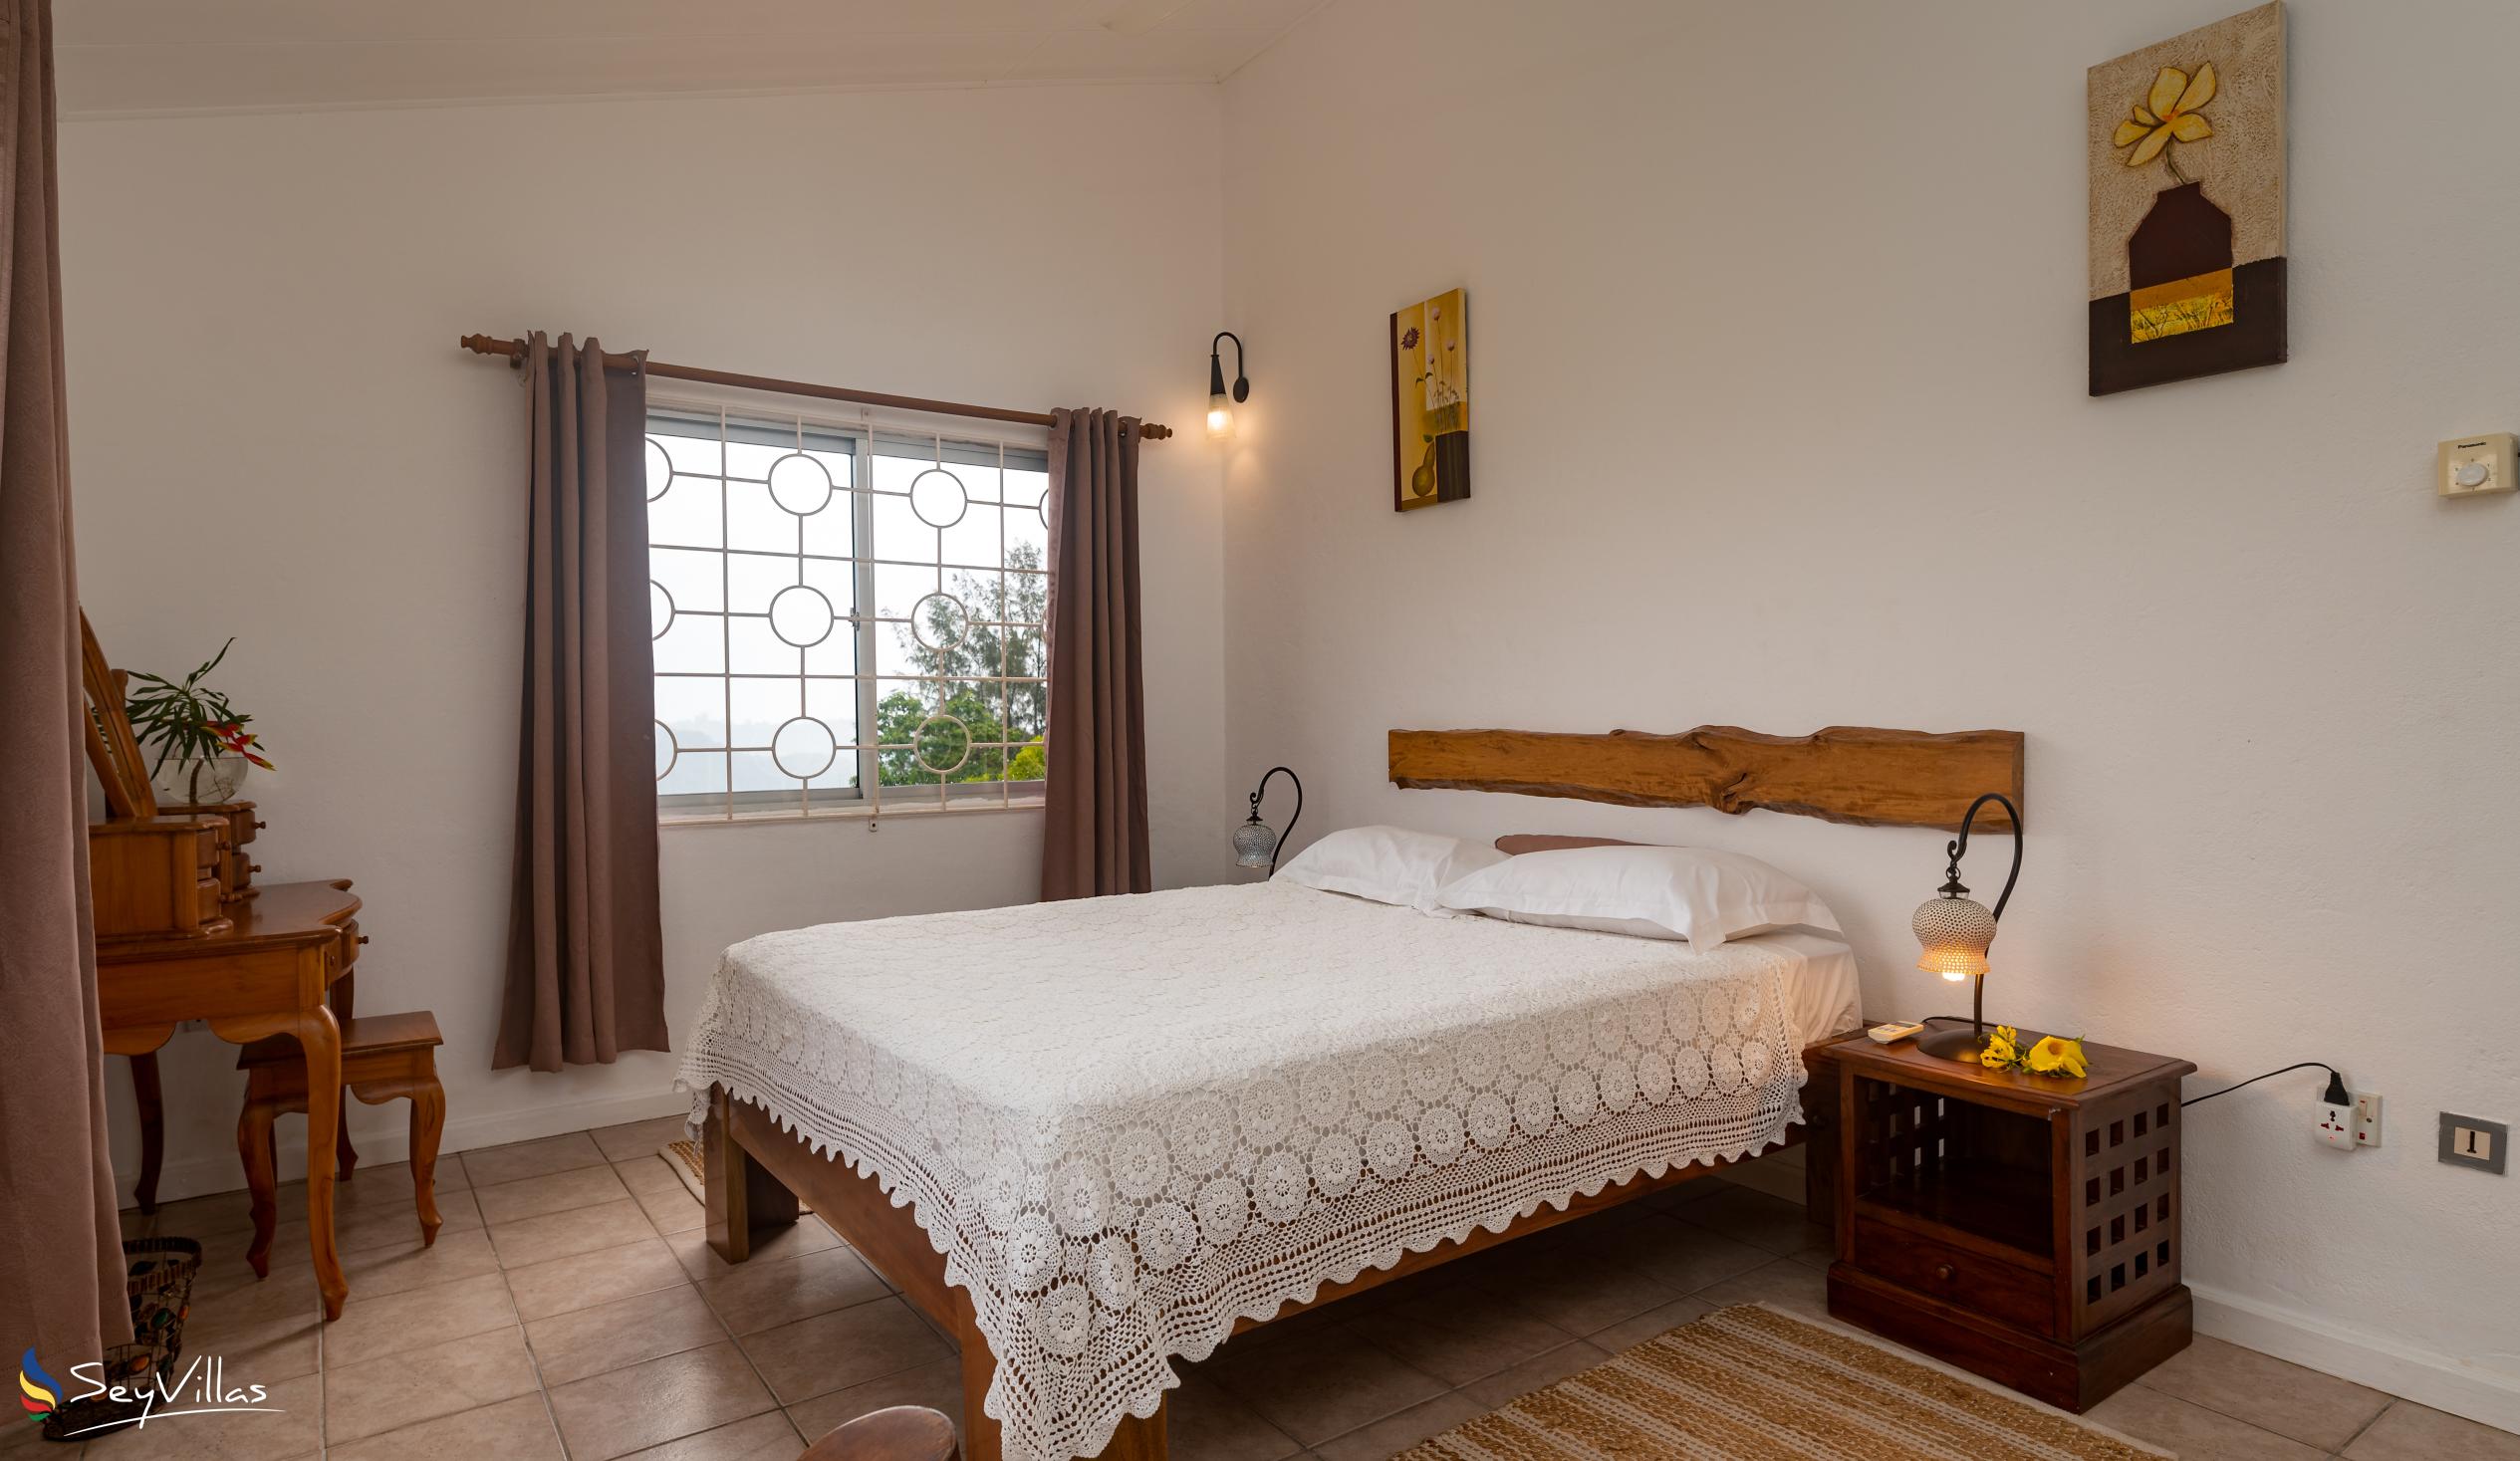 Photo 54: Residence Monte Cristo - 2-Bedroom Apartment - Mahé (Seychelles)